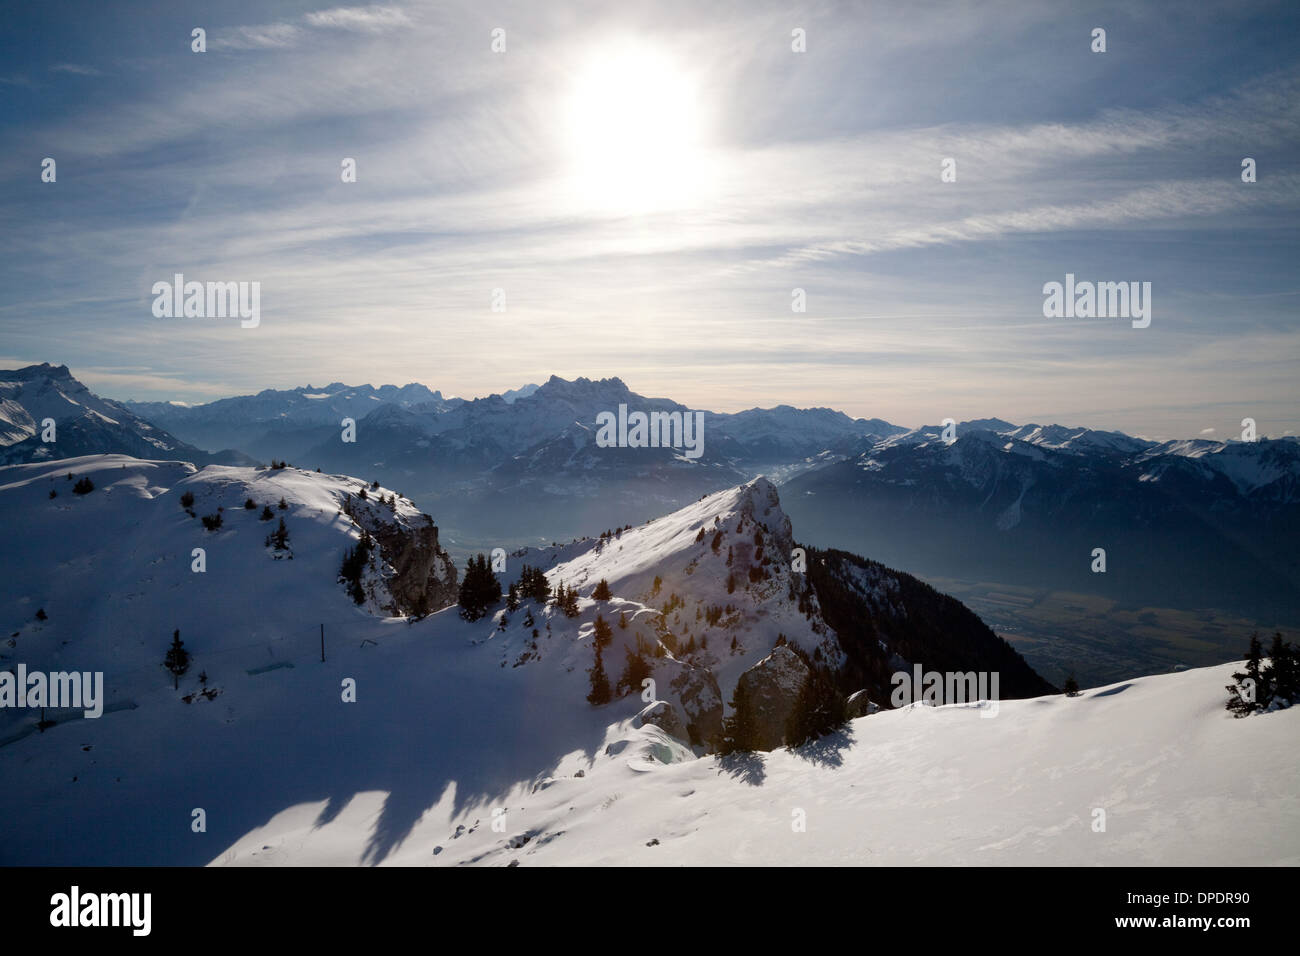 Swiss Alps in winter, looking across the Rhone Valley from La Berneuse towards the Haute Savoie in France;- Leysin, Switzerland Stock Photo